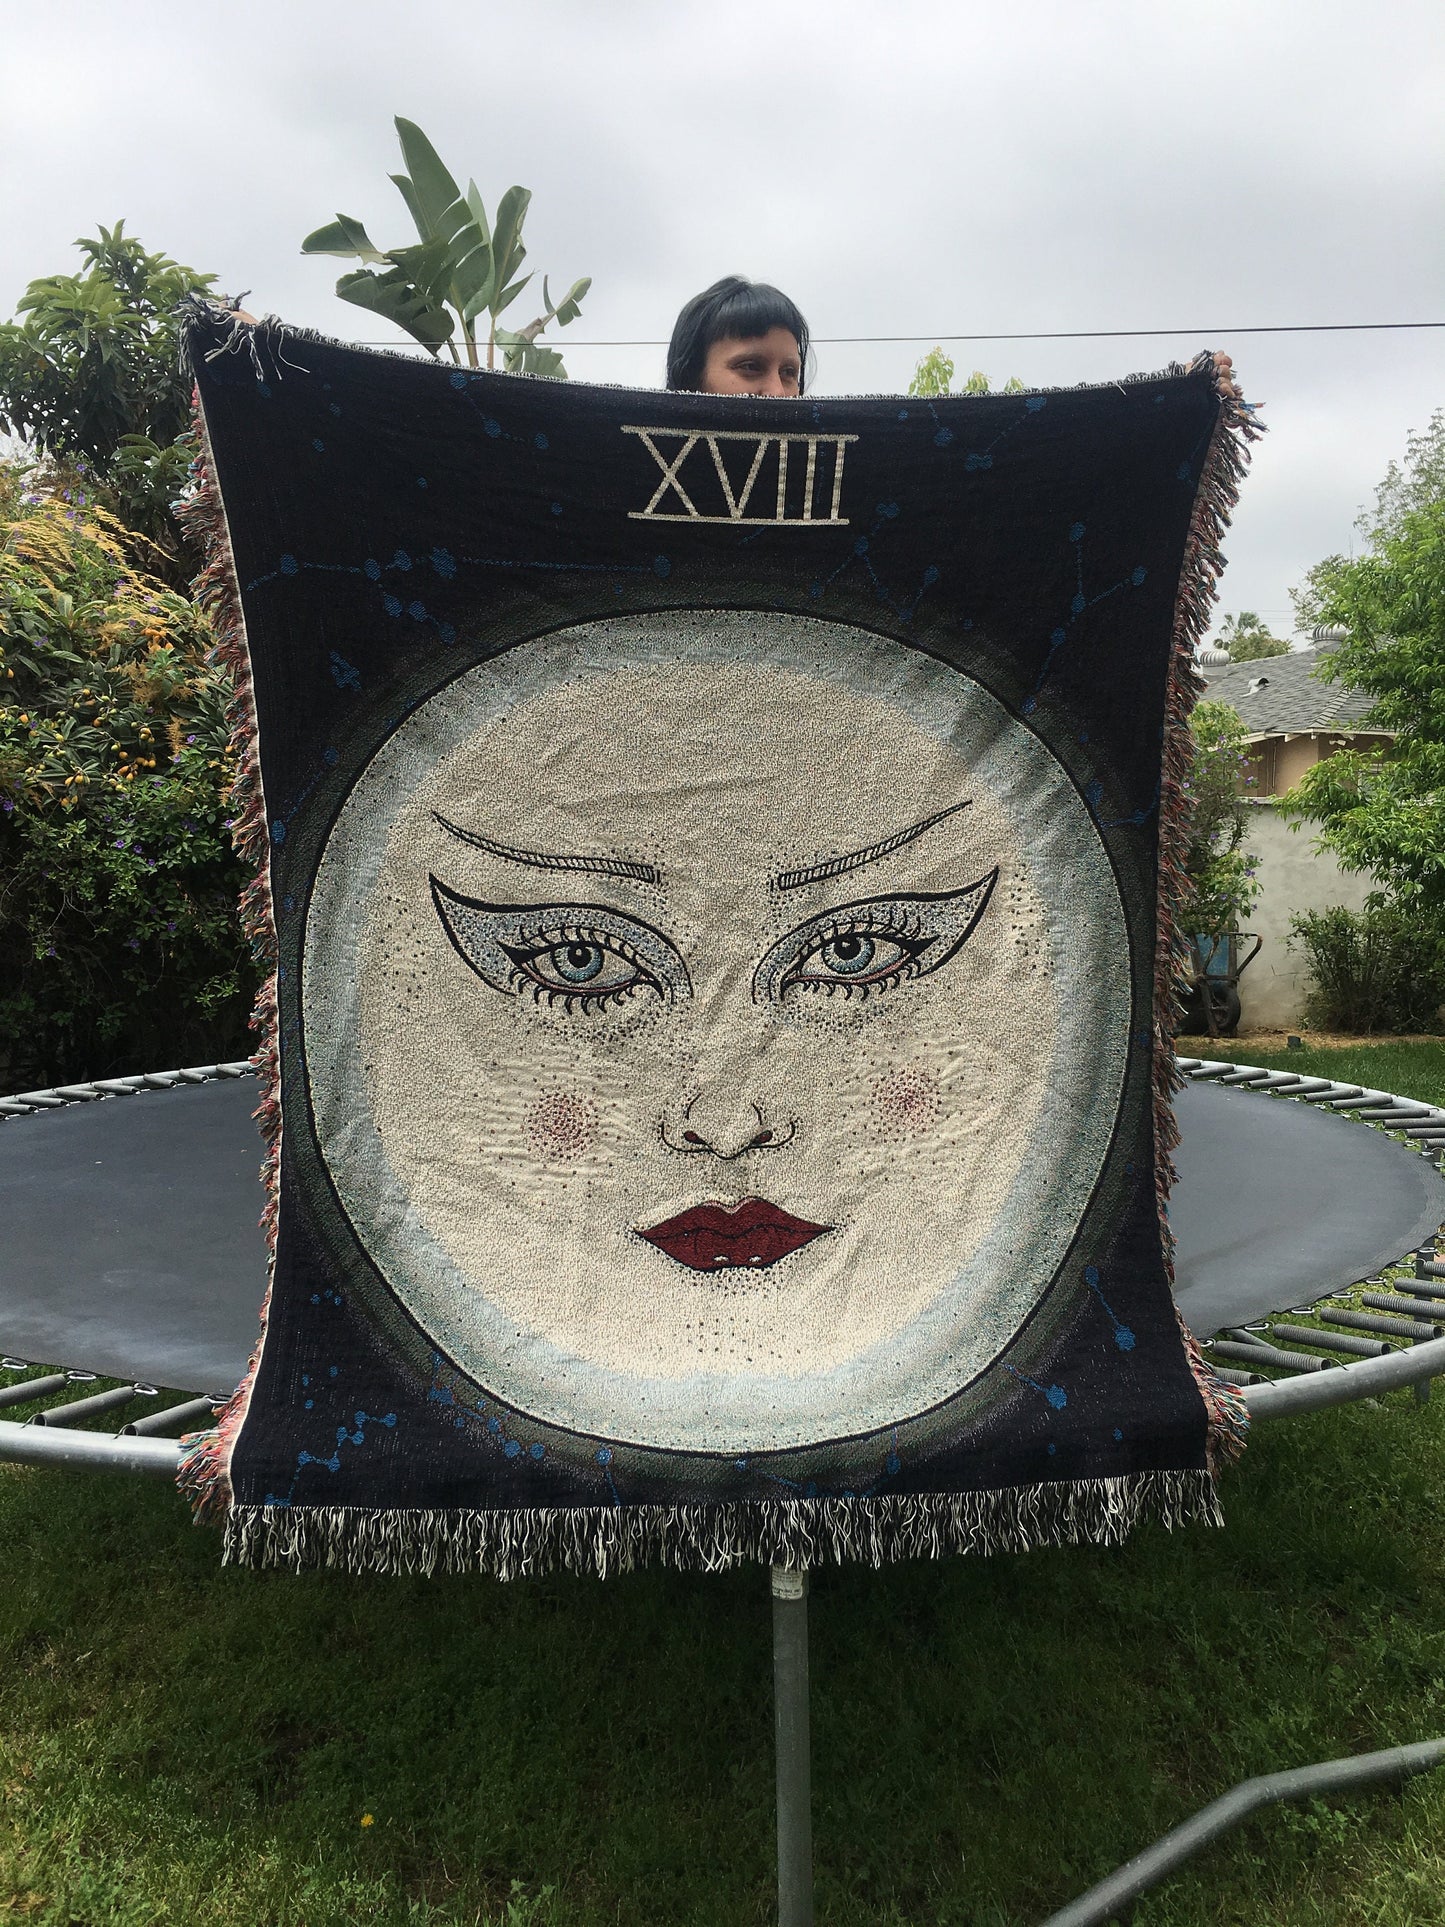 The Moon Woven Blanket